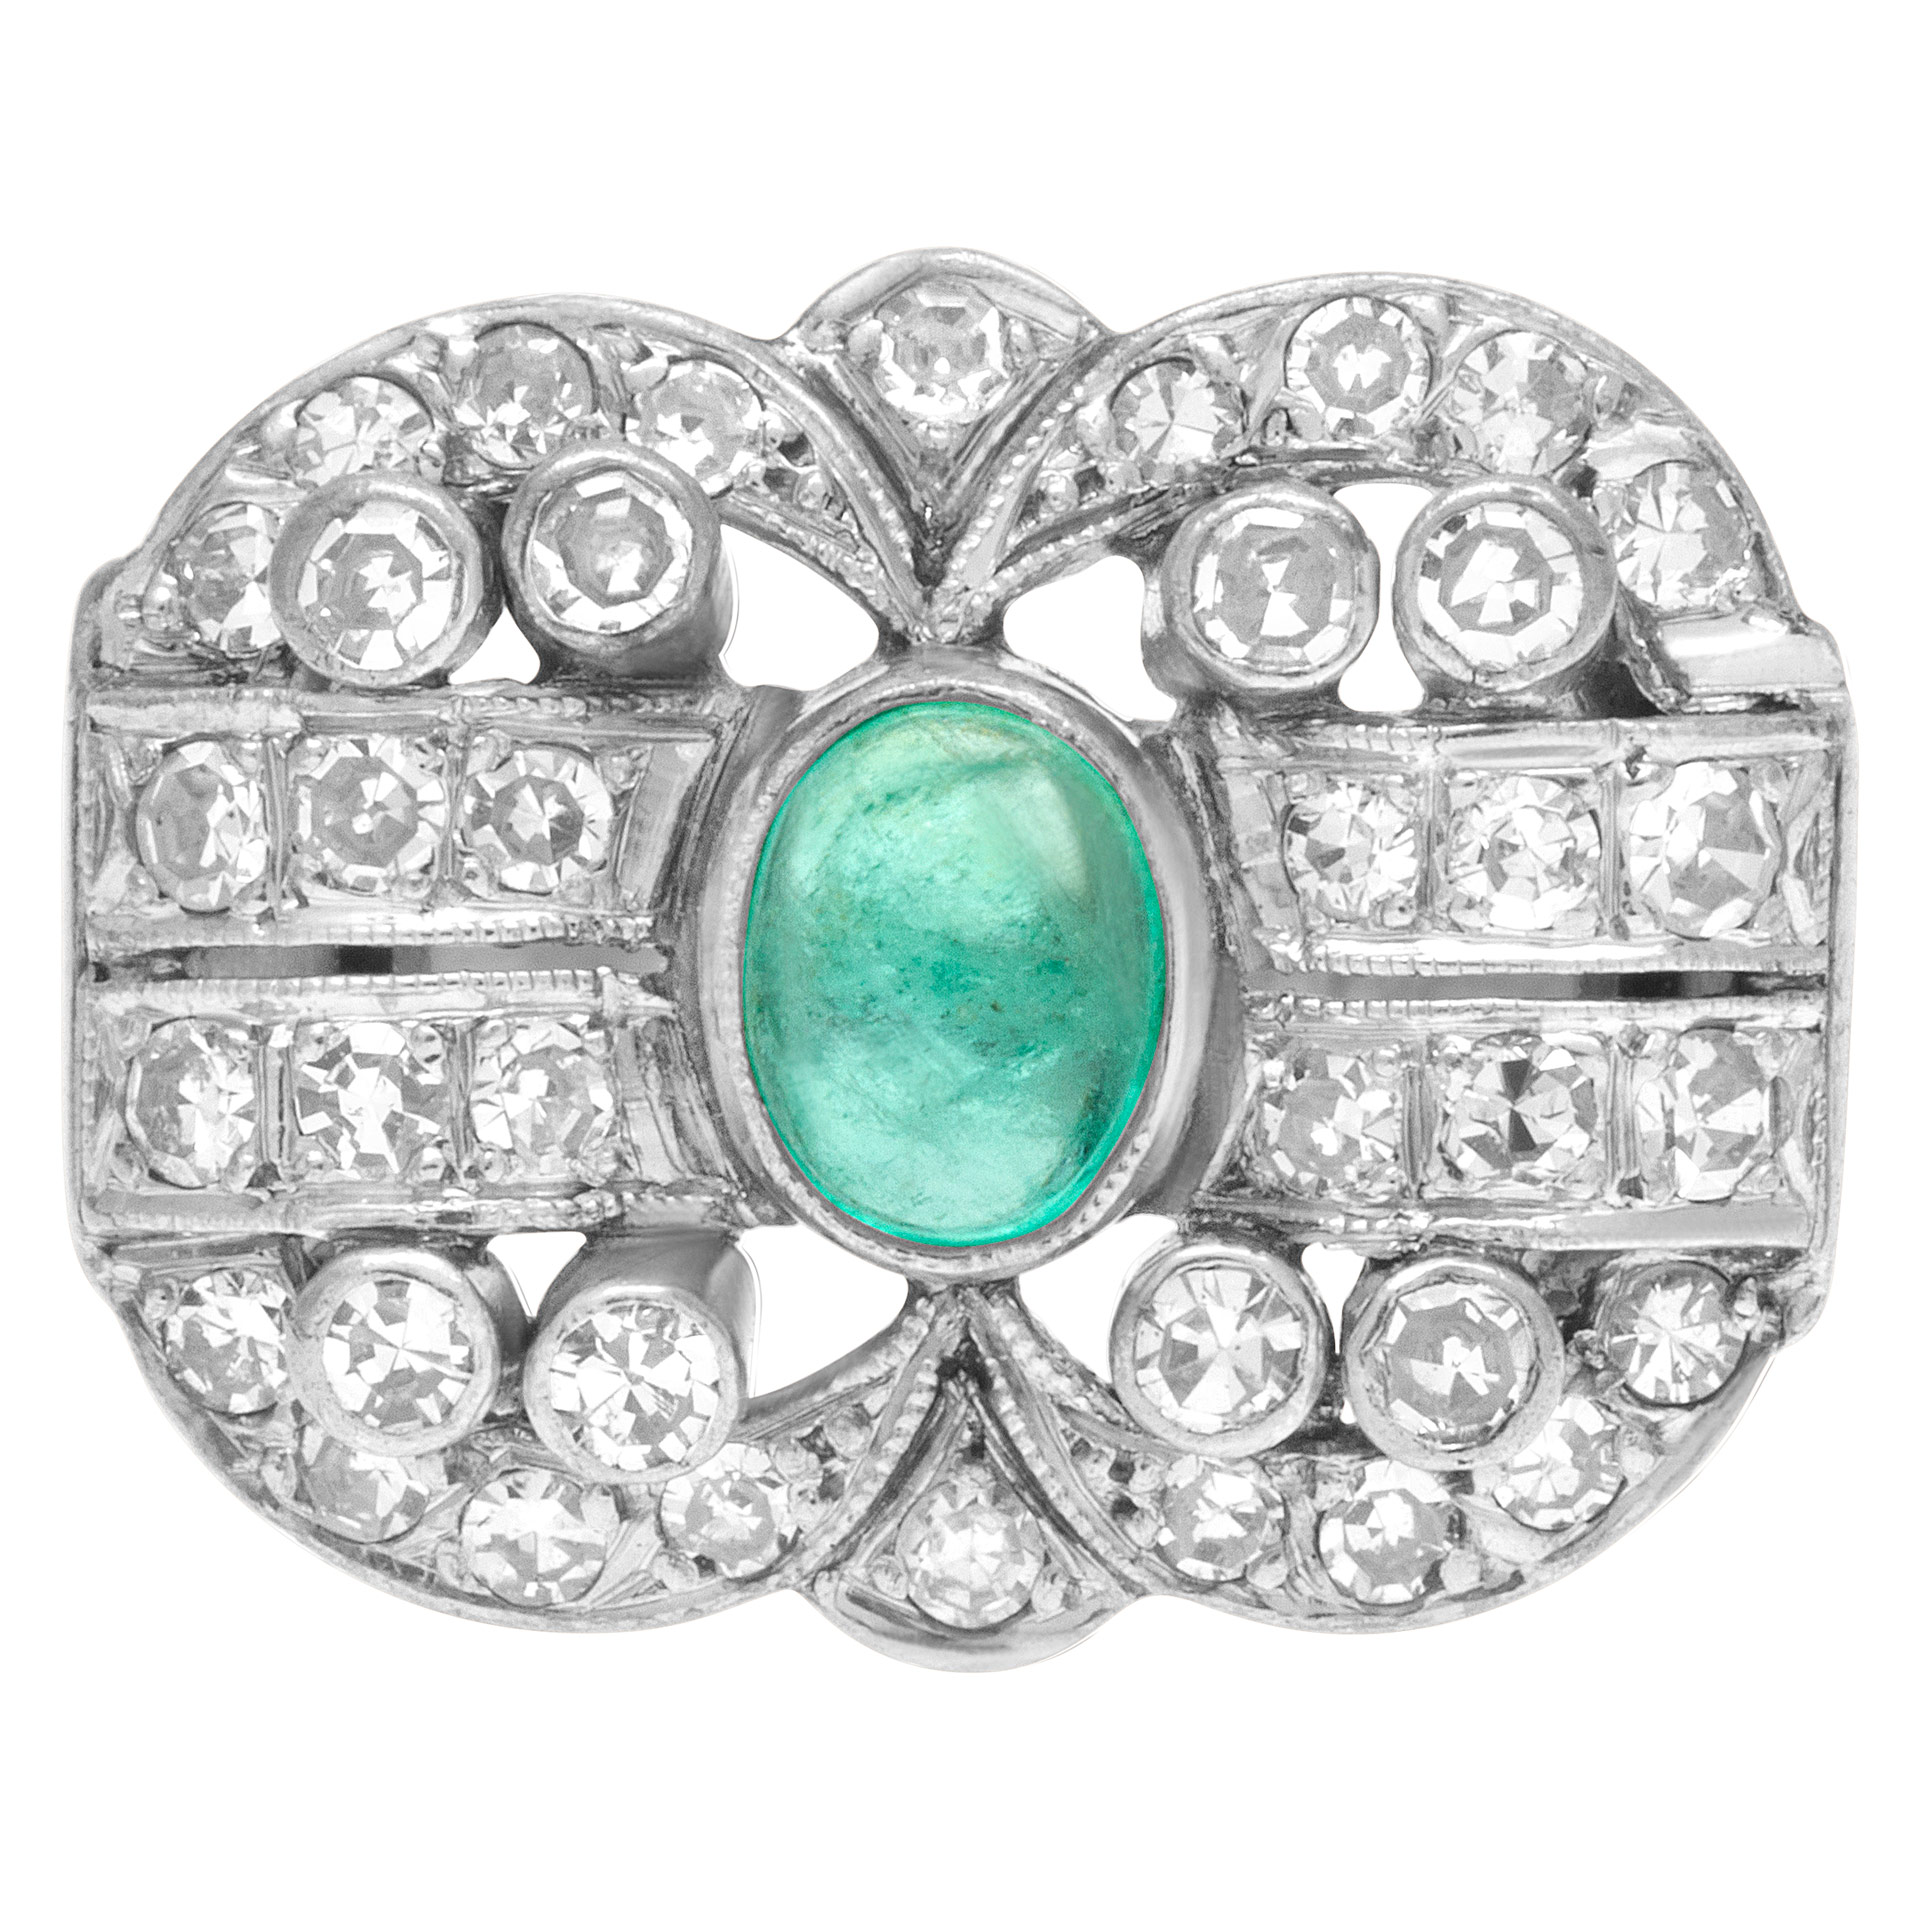 Vintage emerald and diamond ring in platinum